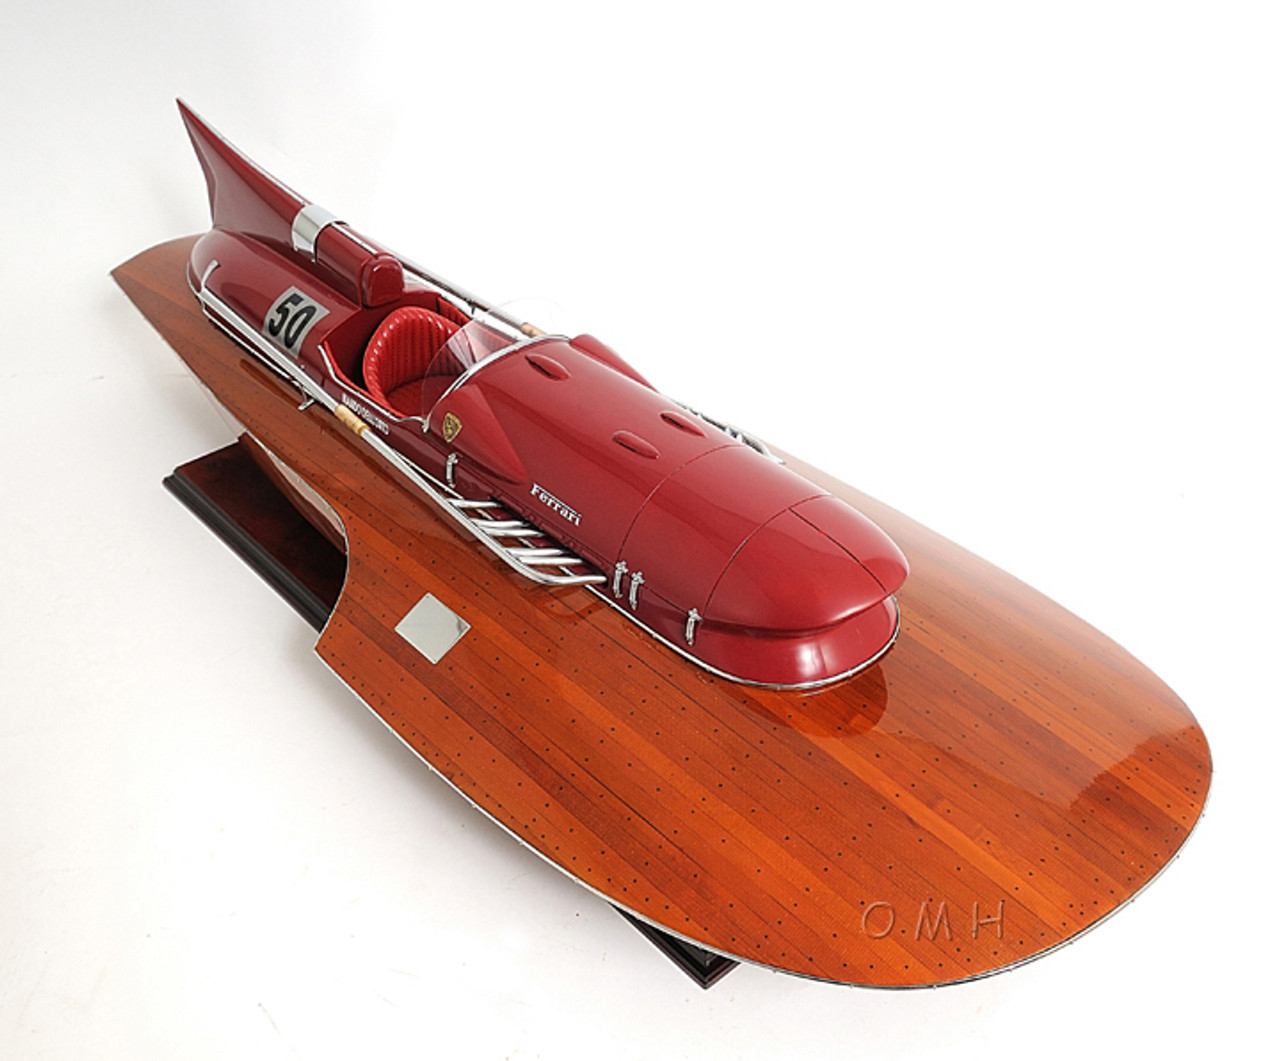 RC Ferrari Arno XI Hydroplane Speed Boat Model